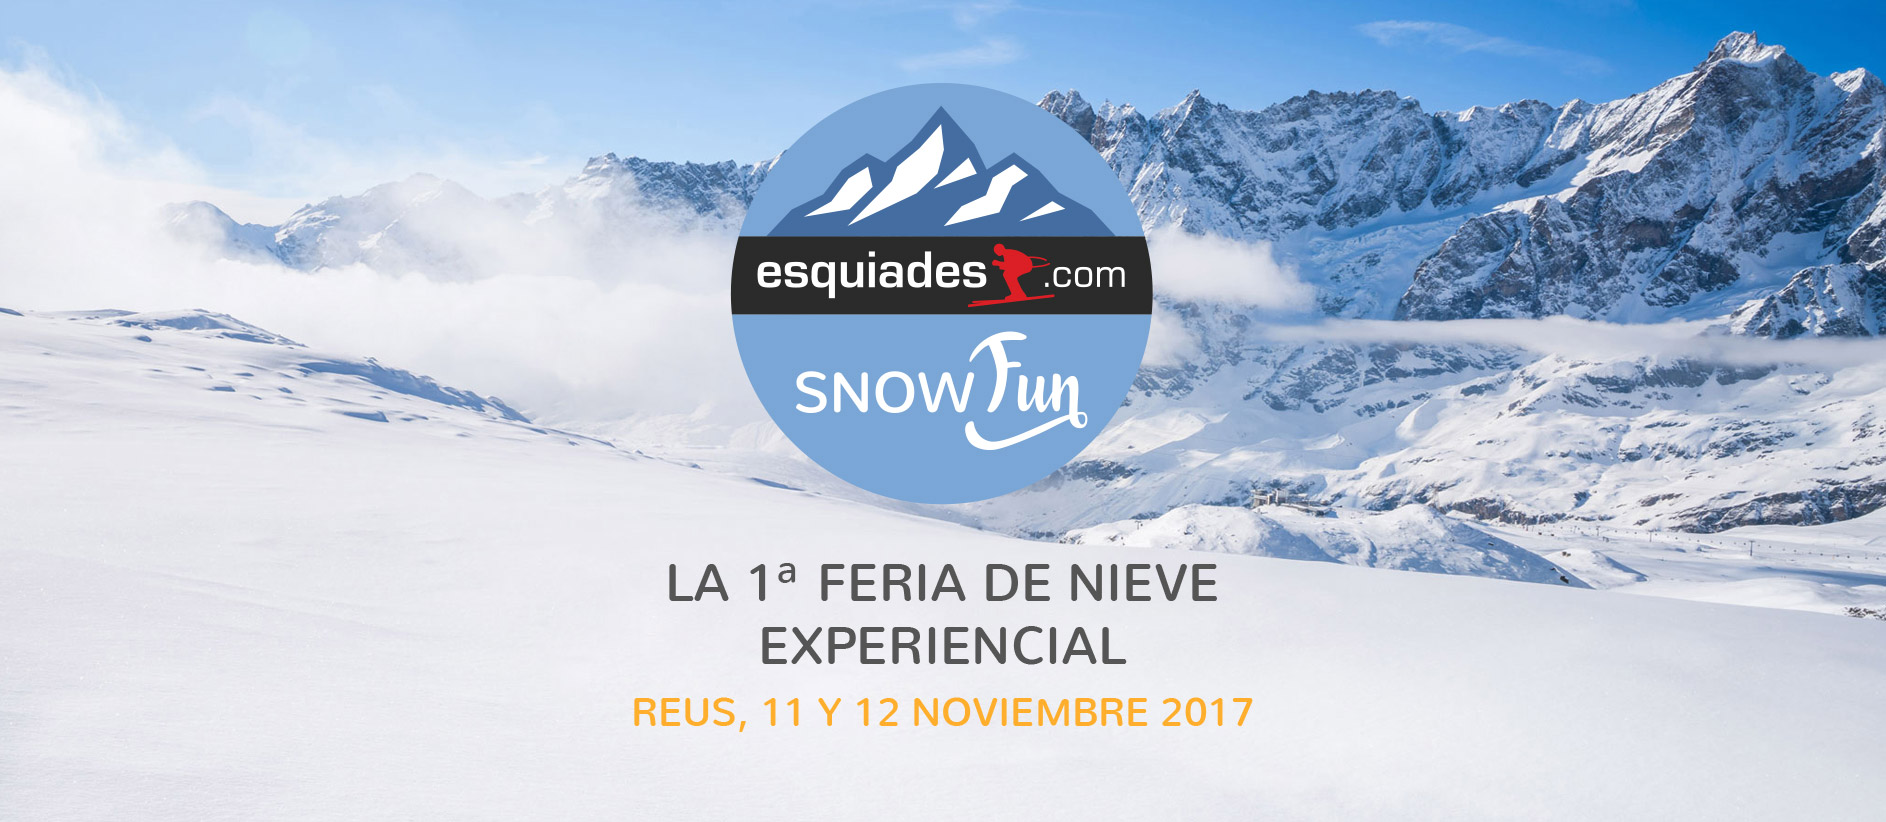 esquiades-snowfun-PORTADA-NOTICIA-cast